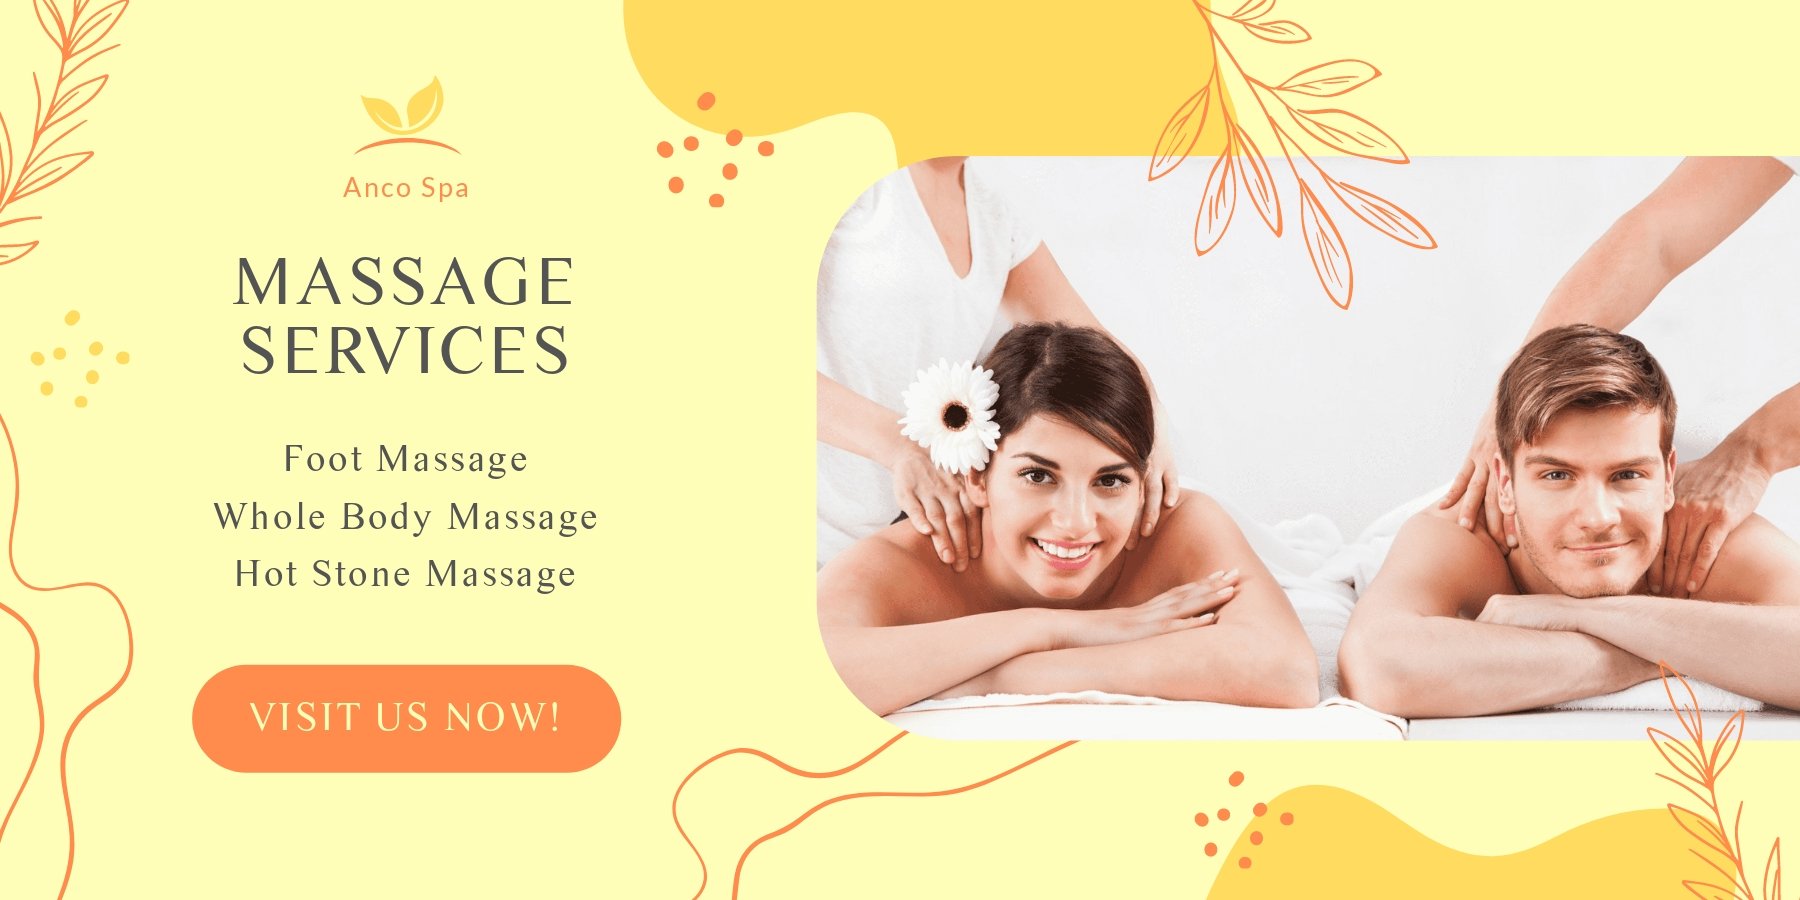 Massage Services Banner Template